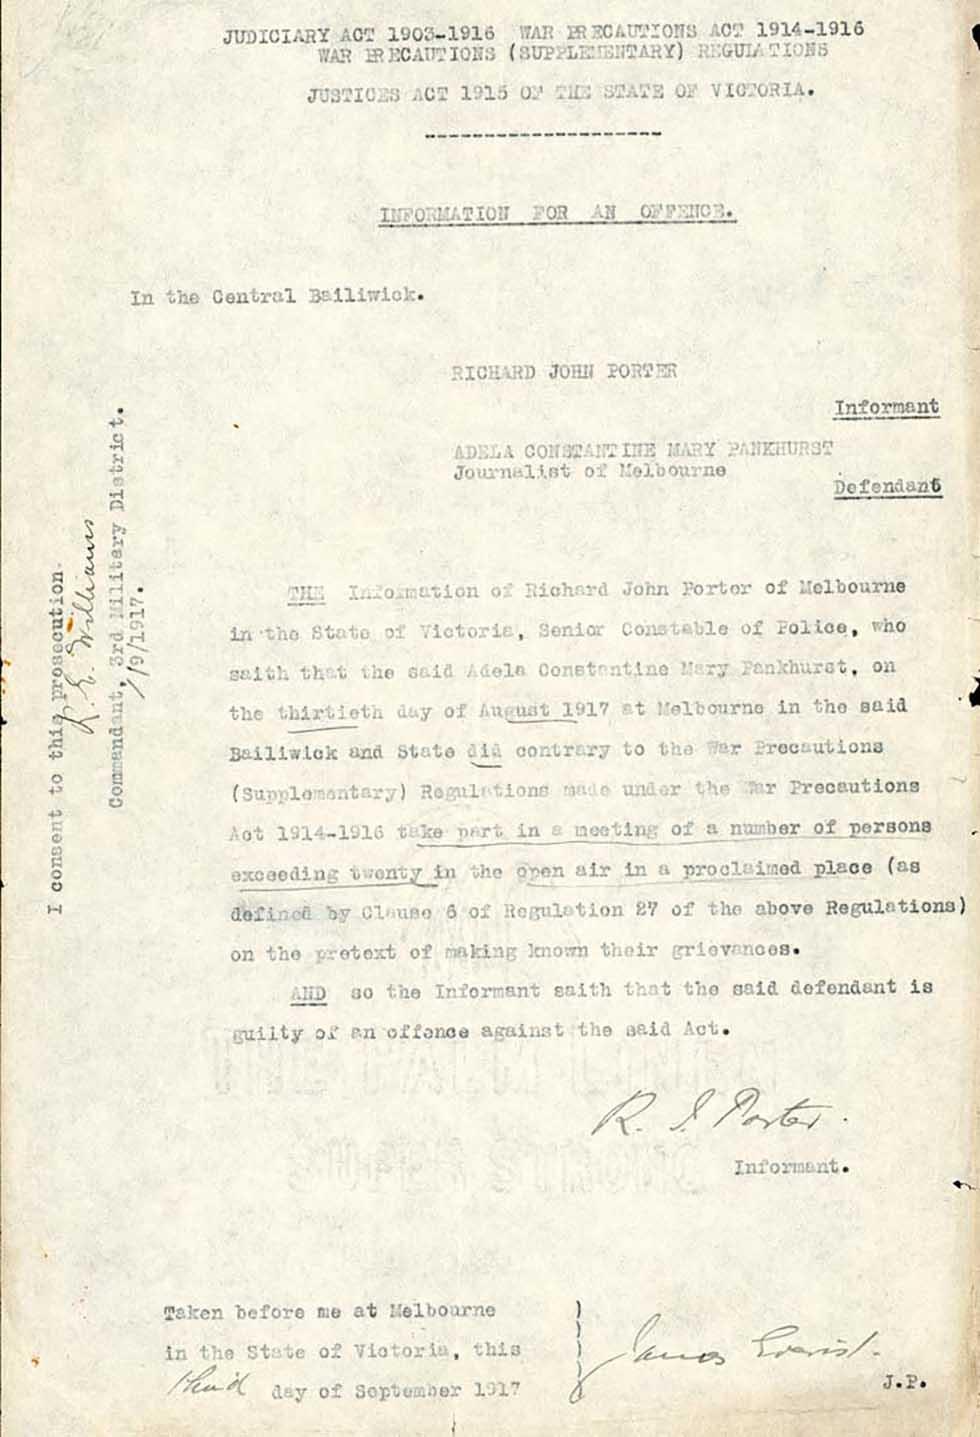 Report on the arrest of suffragette Adela Pankhurst for anti-war protest.